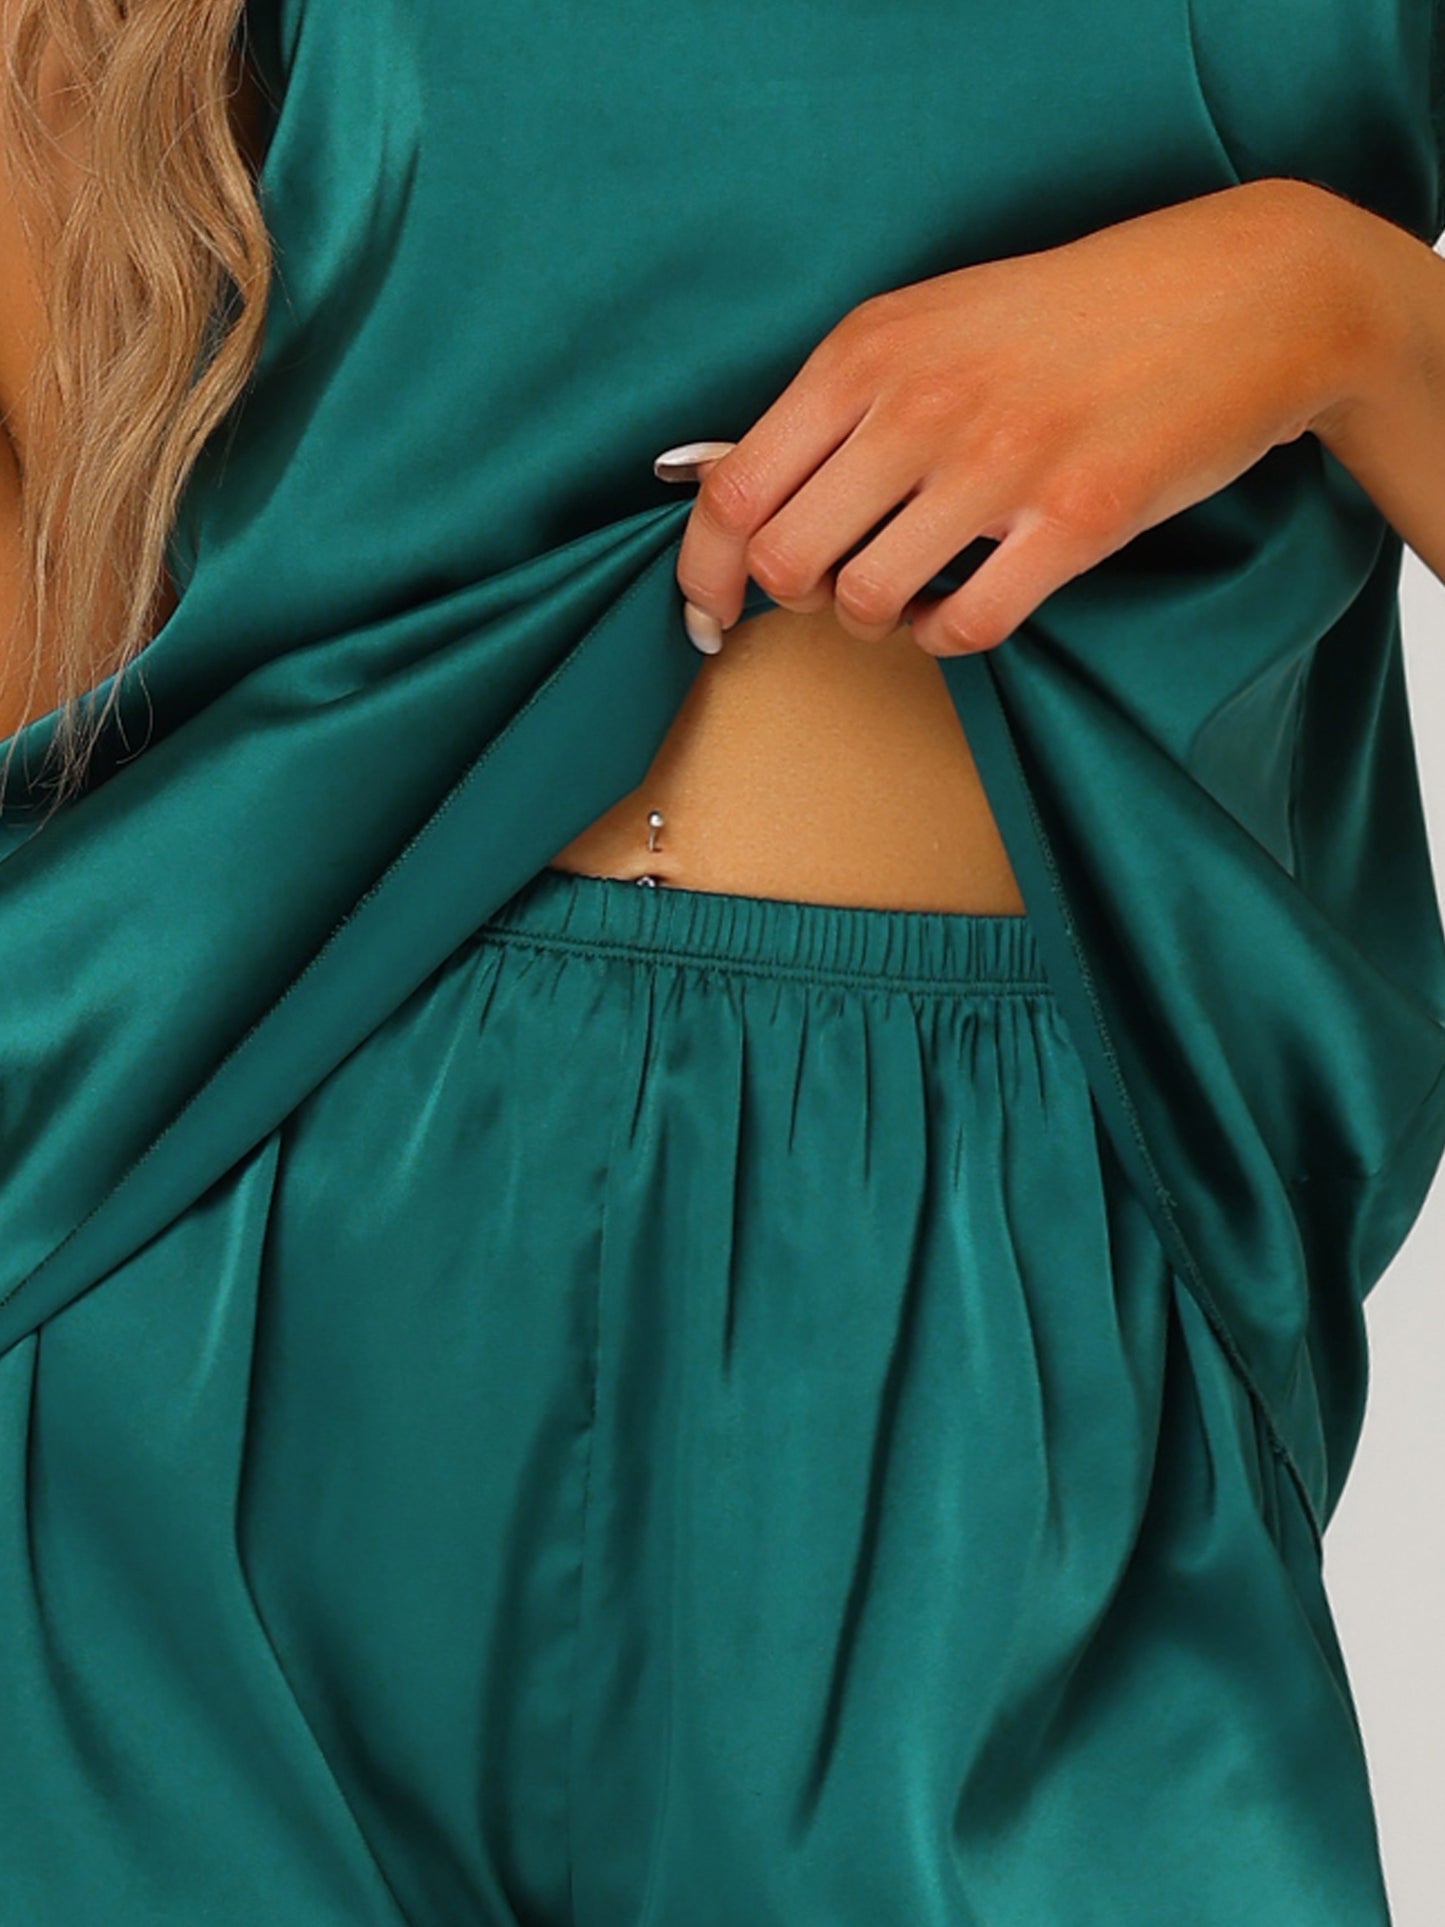 cheibear Satin Lingerie Lace Trim Cami Tops Shorts Sleepwear Pajamas Sets Dark Green